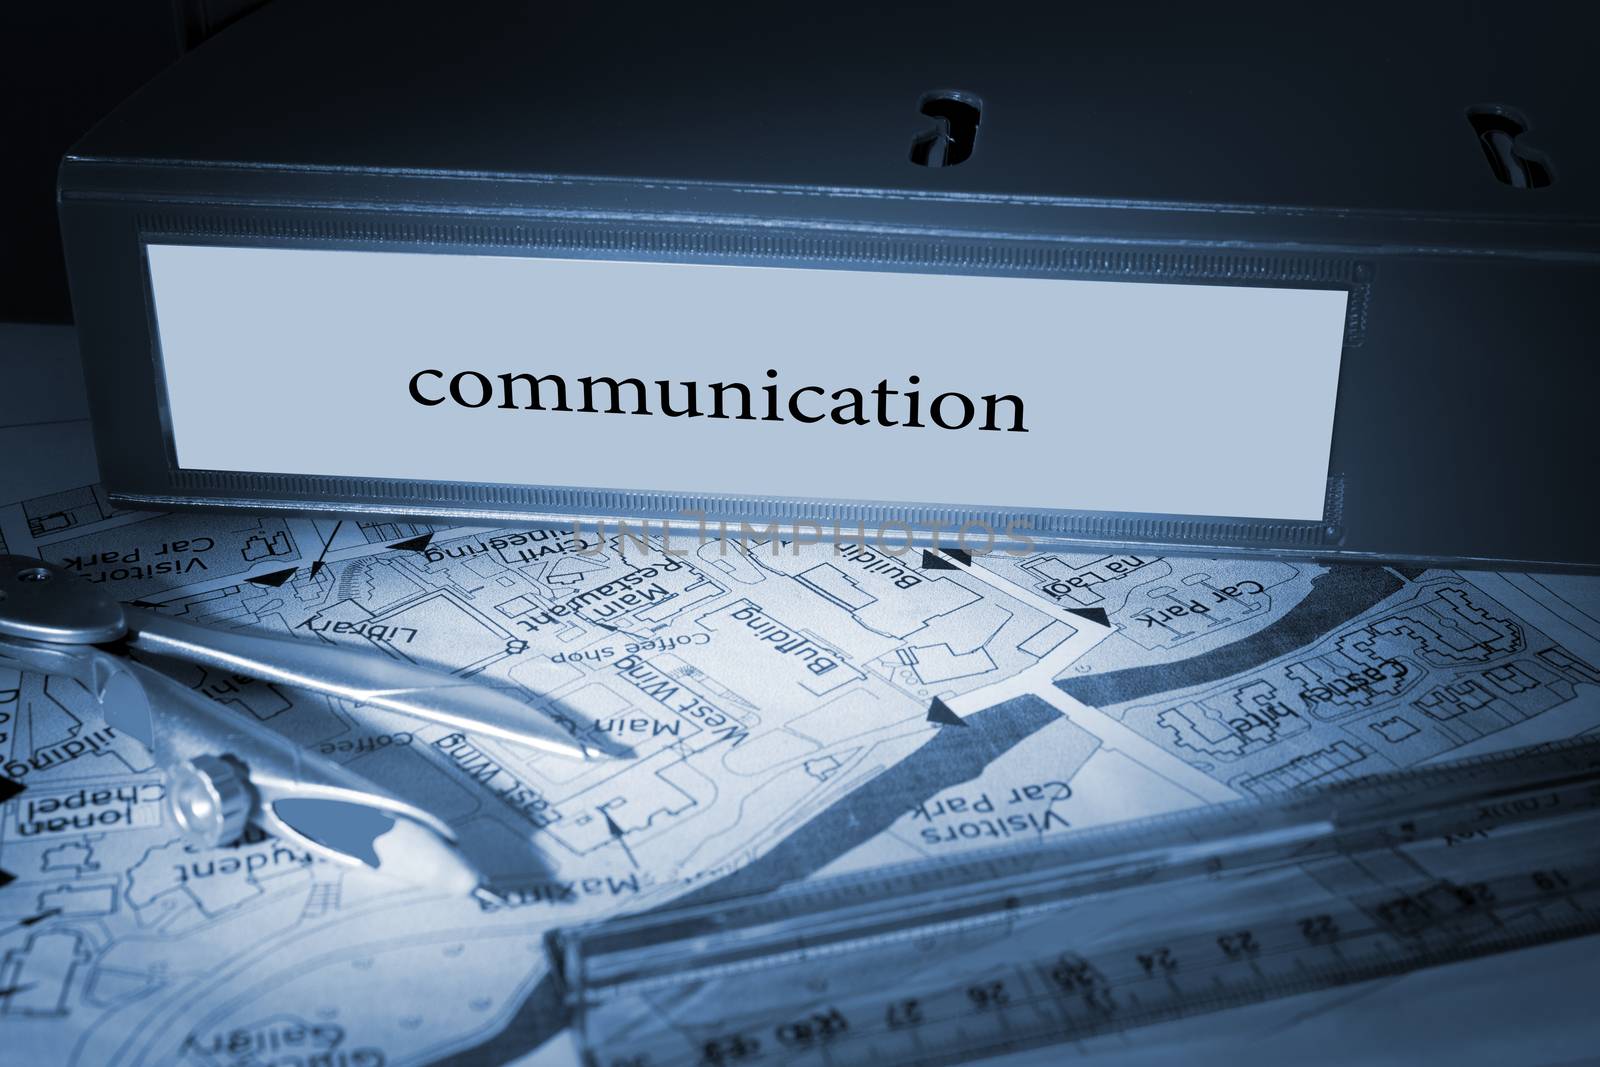 Communication on blue business binder  by Wavebreakmedia